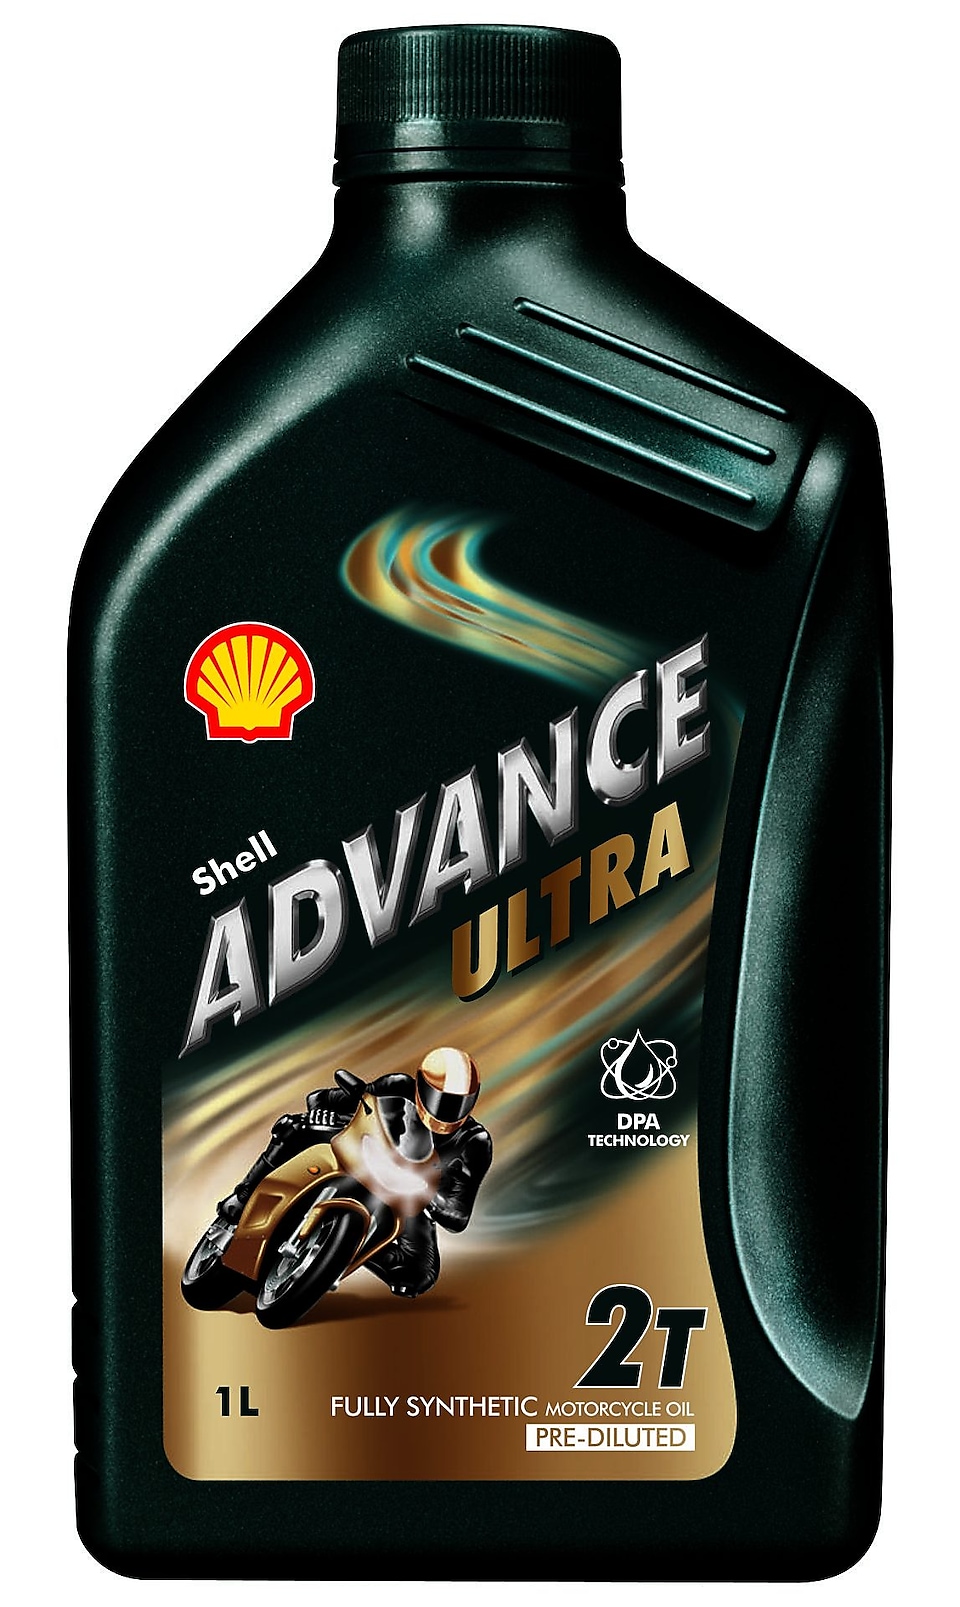 Shell Advance AX2